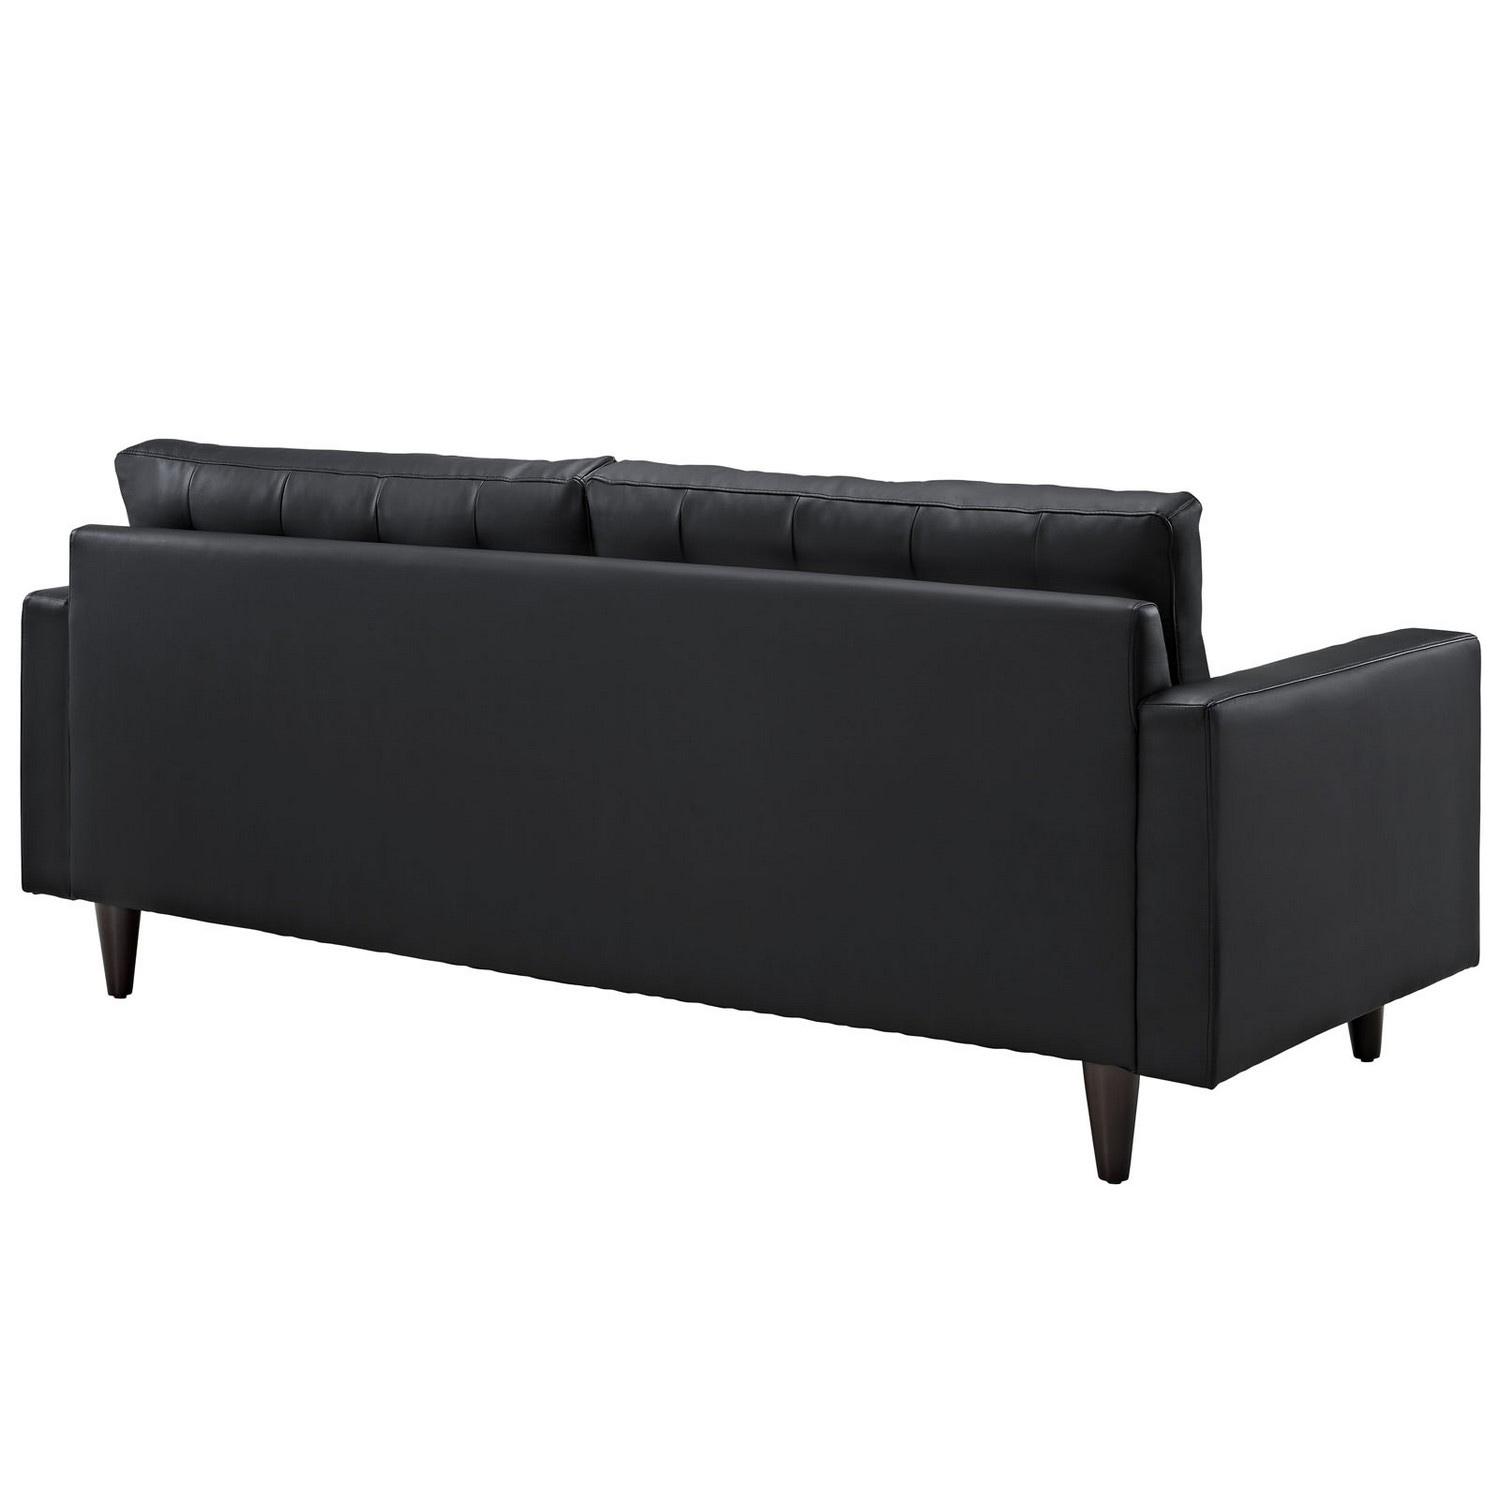 Modway Empress Leather Sofa - Black